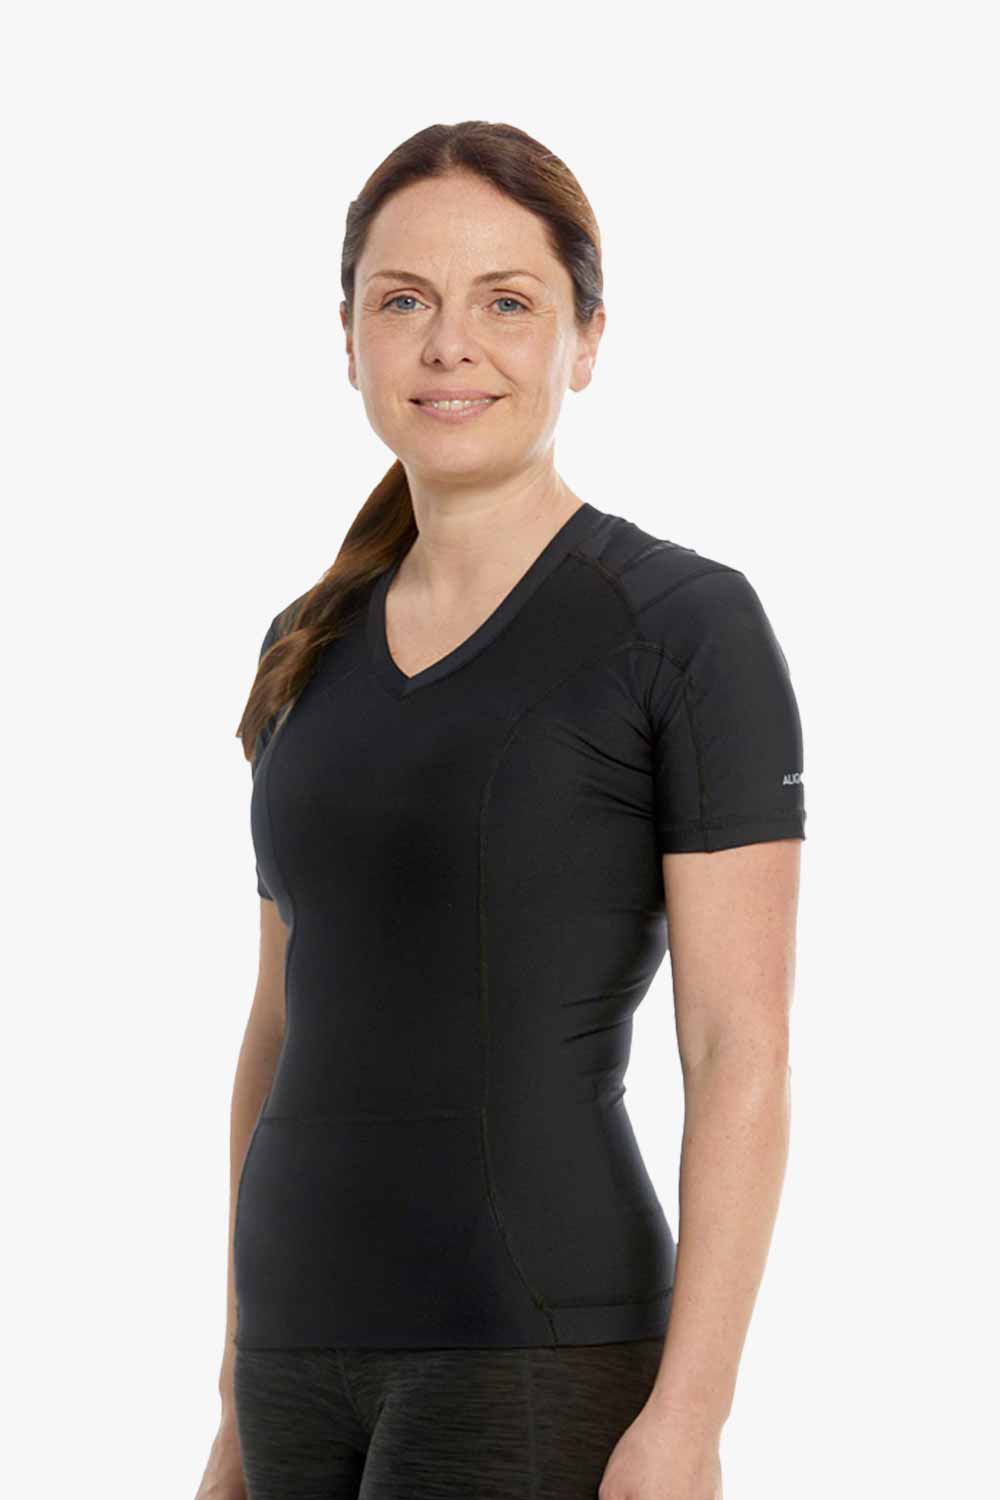 AlignMed Posture Shirt 2.0 - Women's